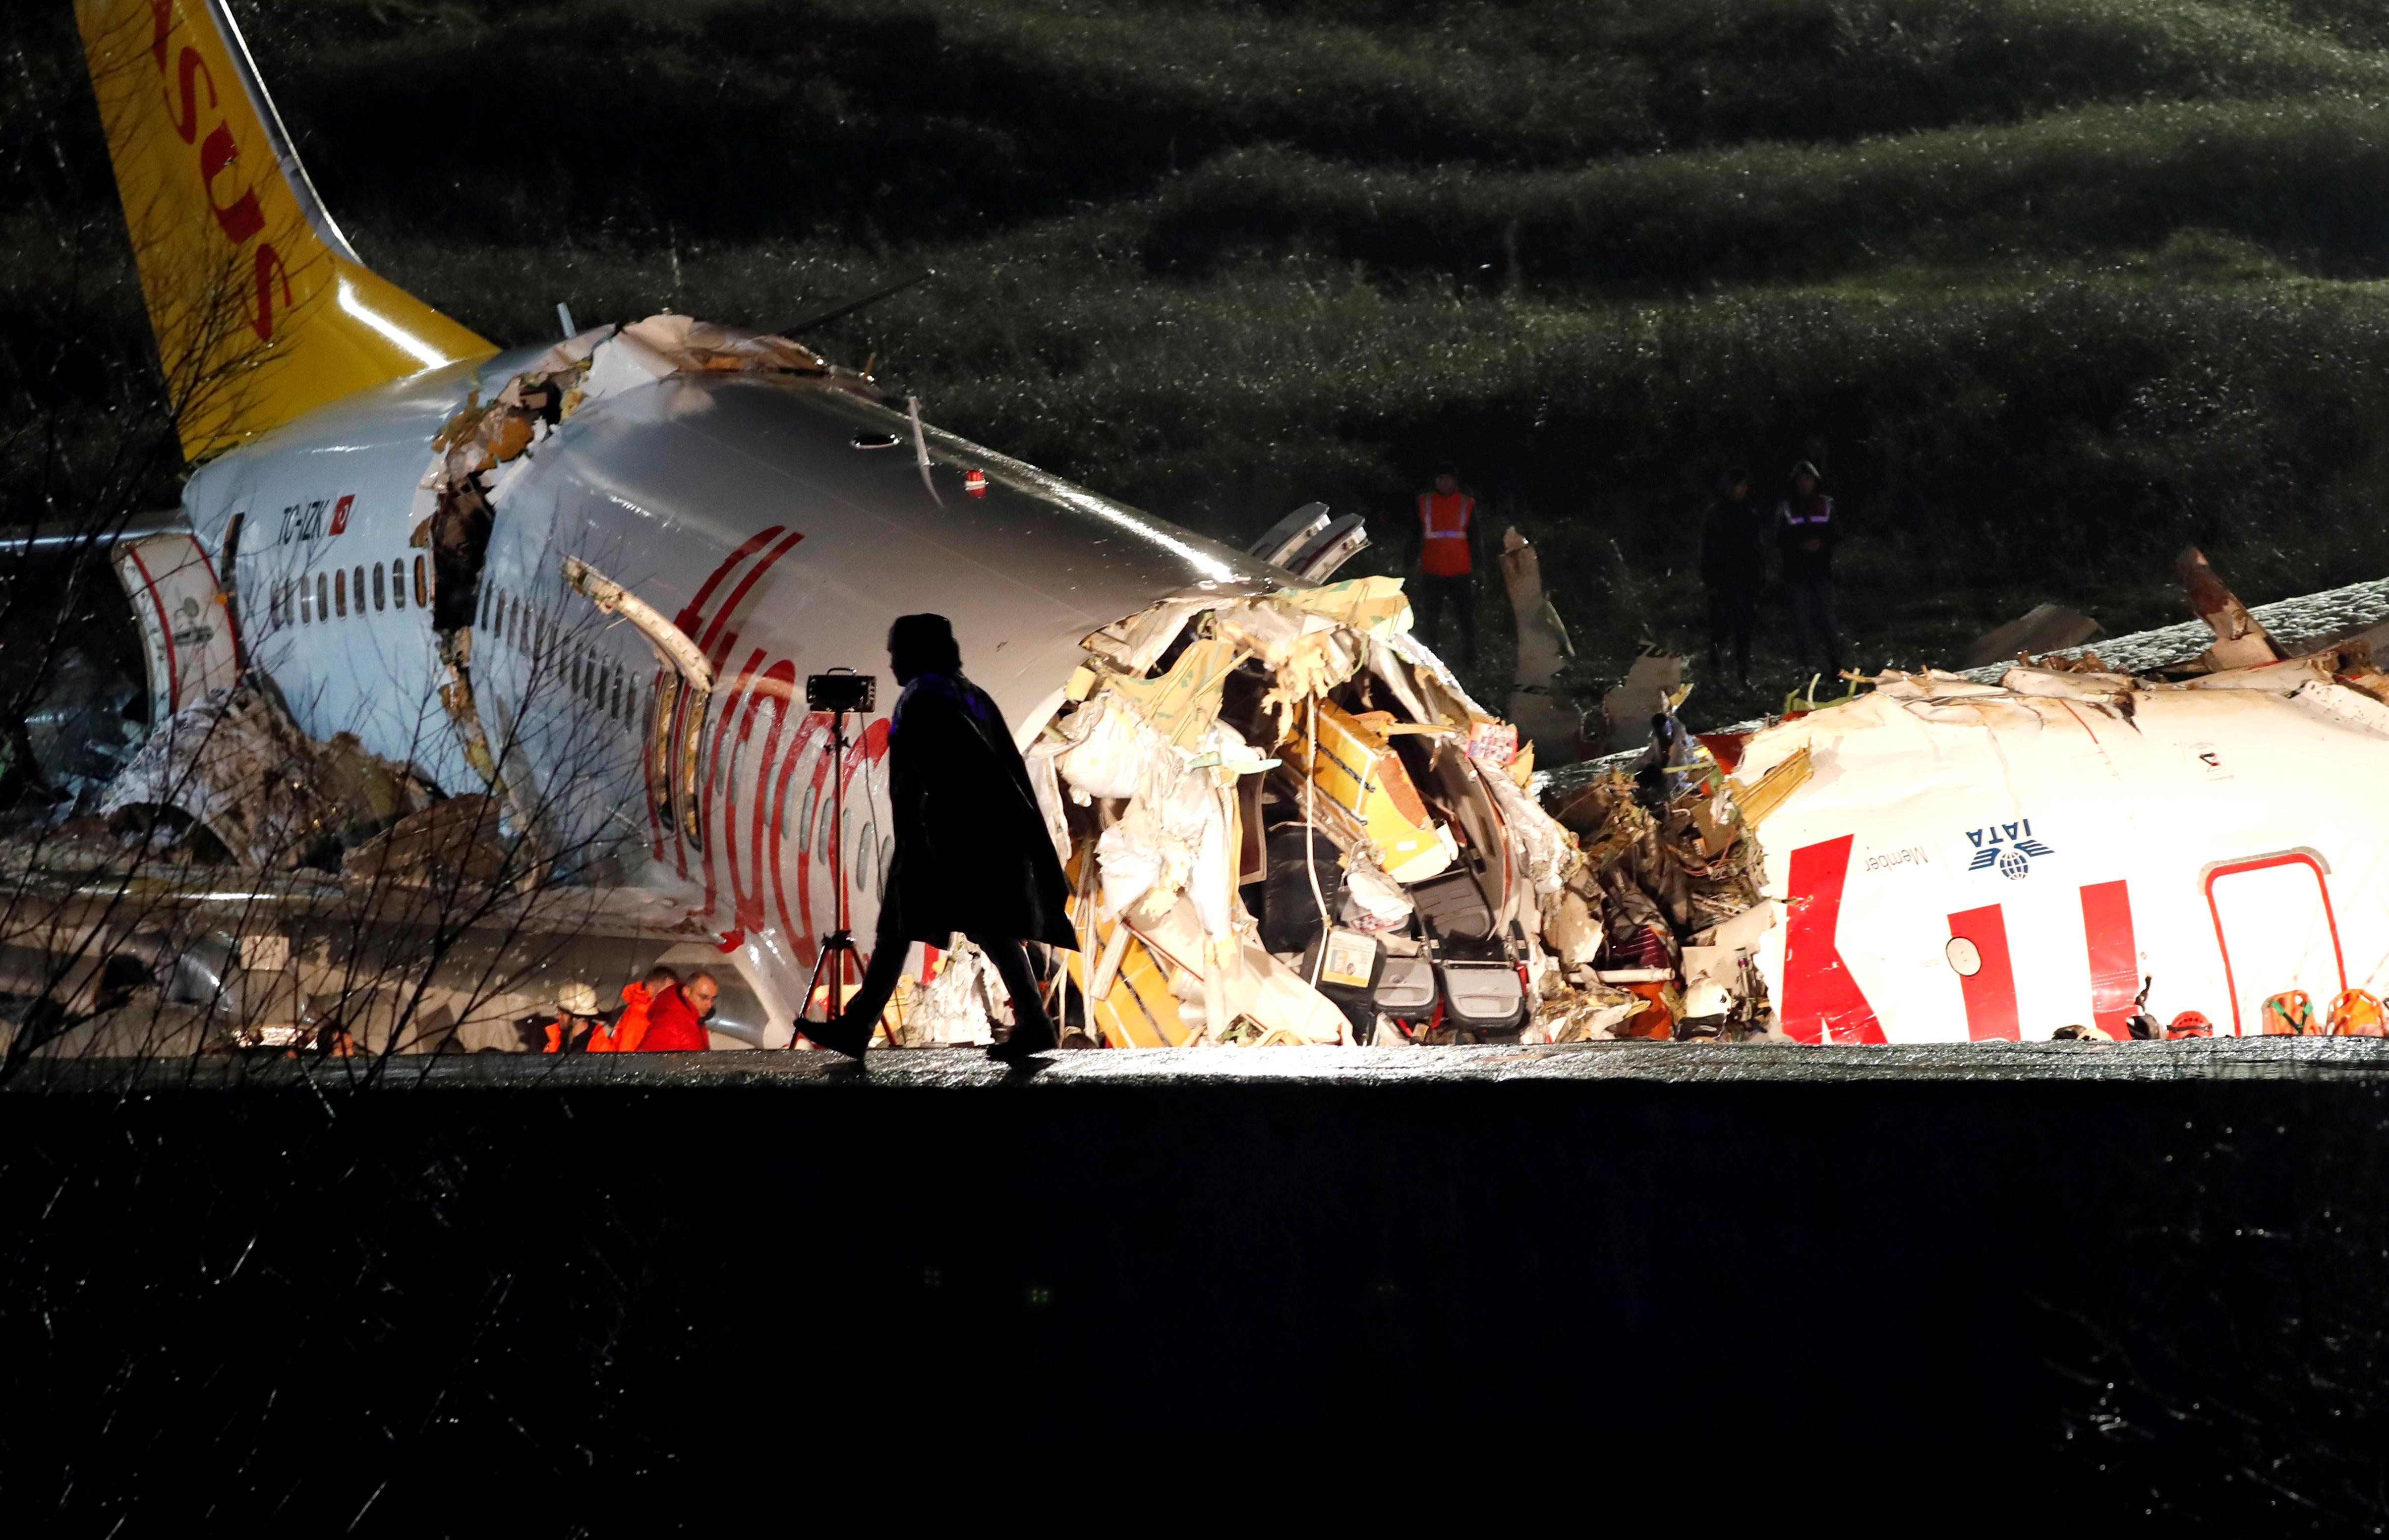 14 сентября 2008 г. Боинг 737 Пермь катастрофа.